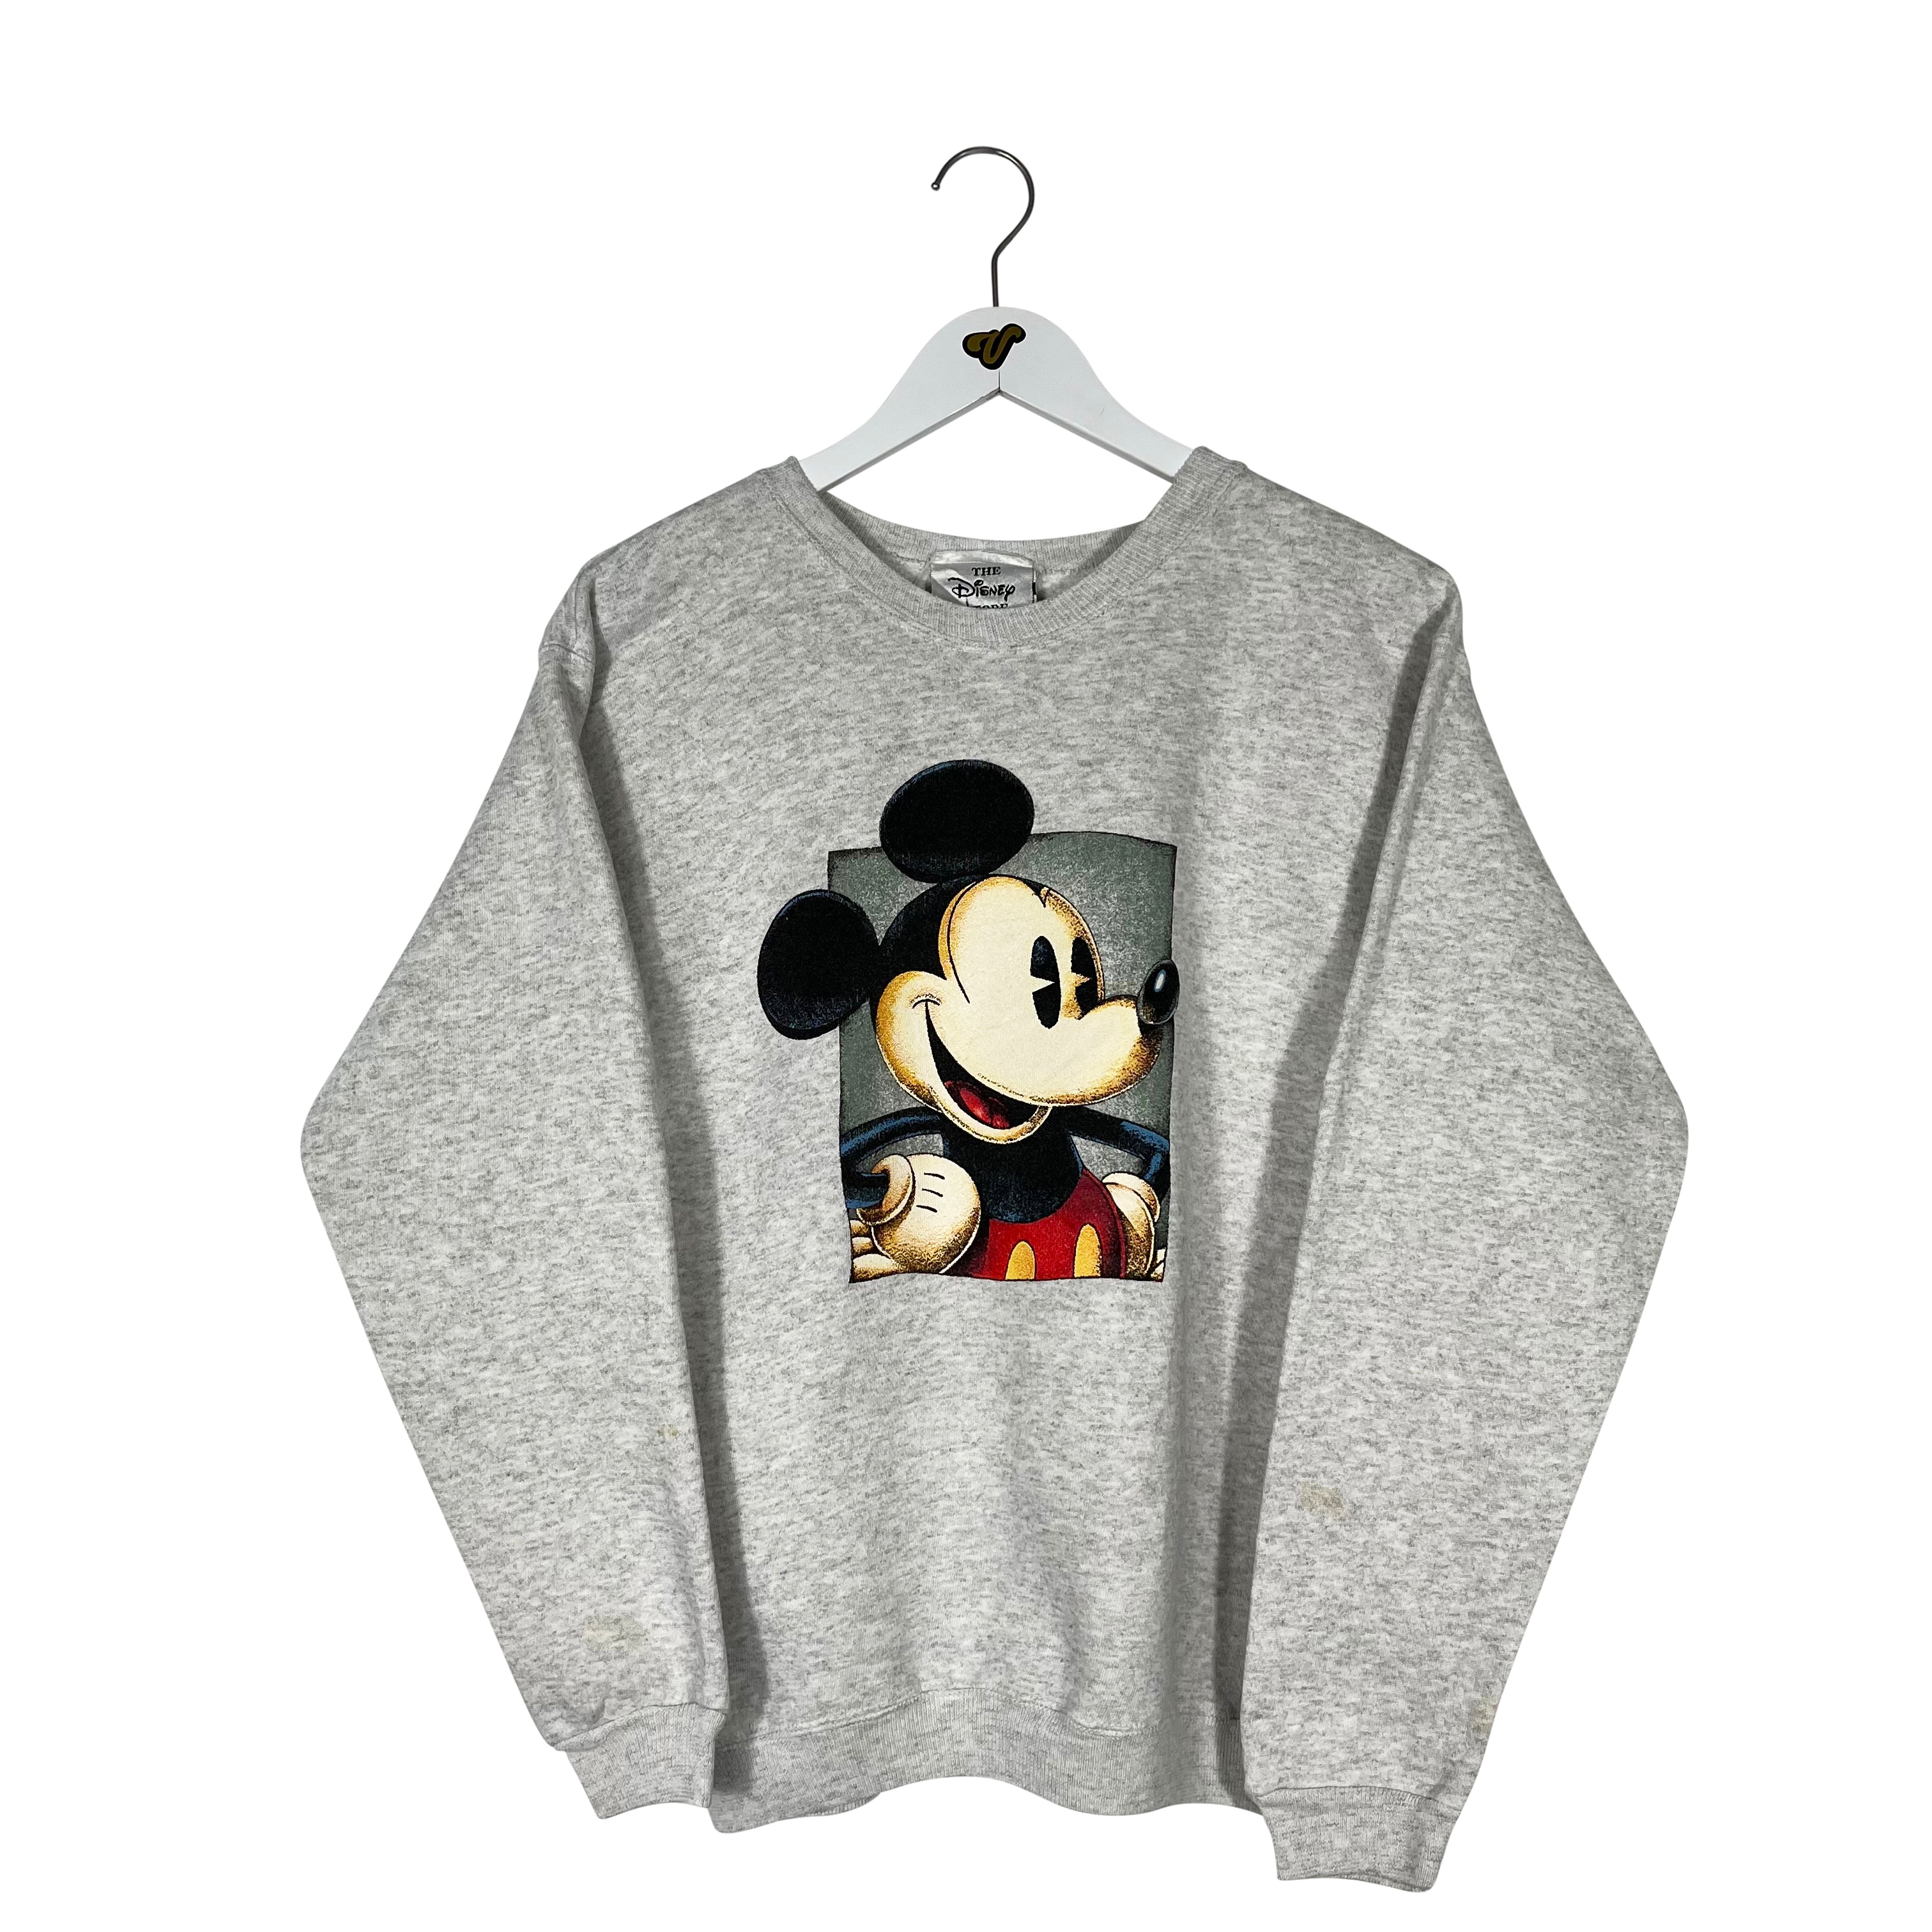 Vintage Disney Mickey Mouse Crewneck Sweatshirt - Women's Small